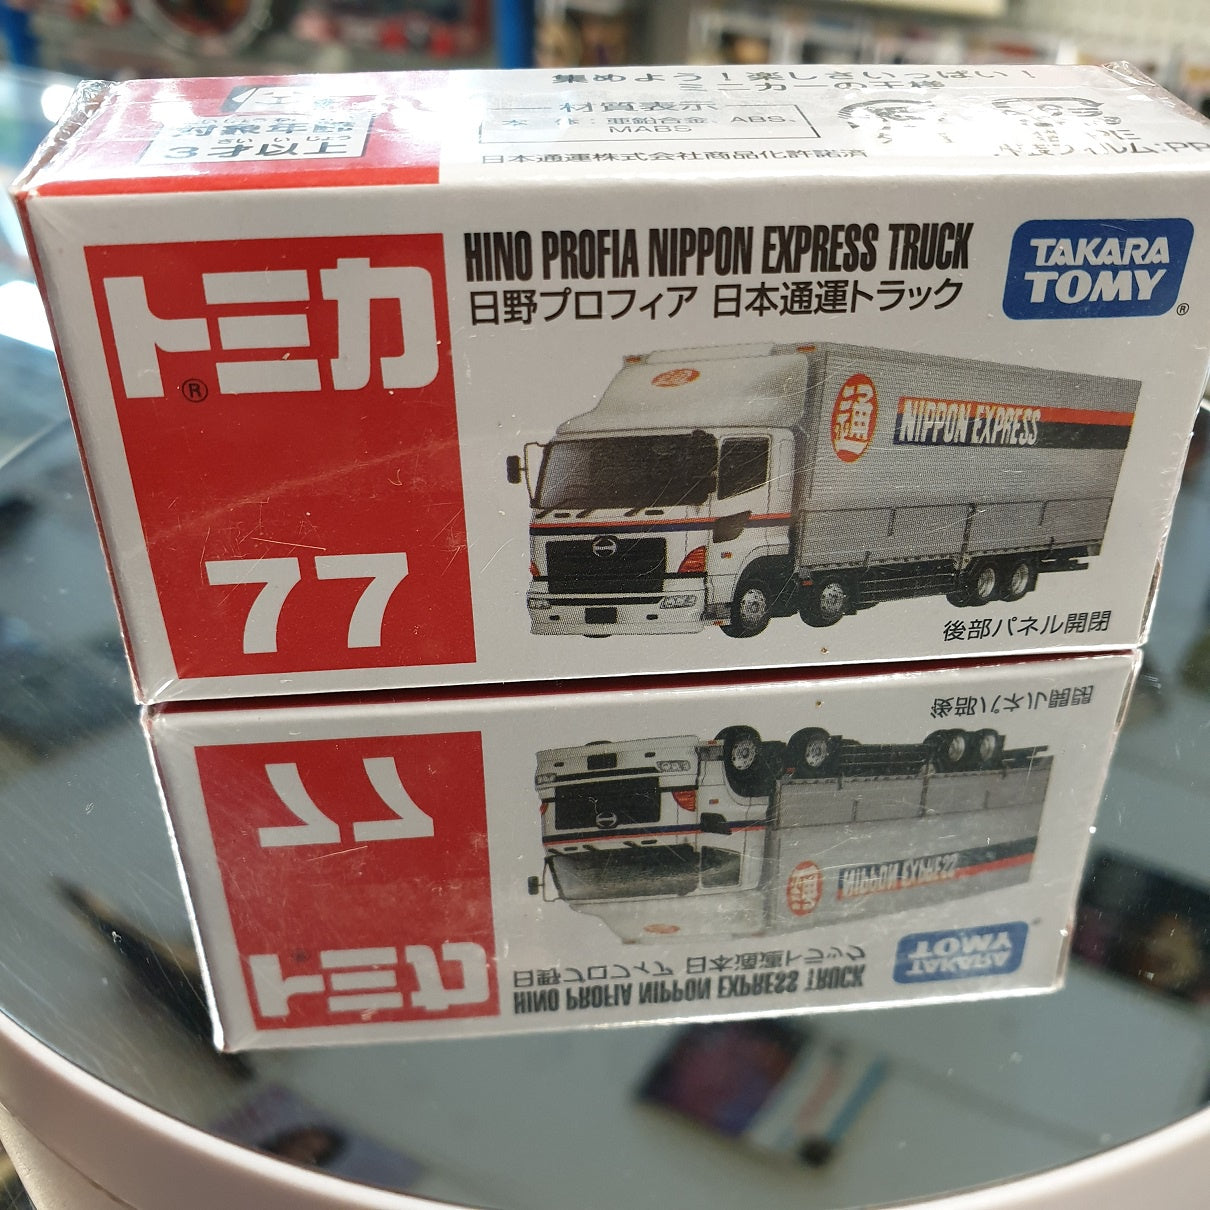 Takara Tomy Tomica - Hino Profia Nippon Express Truck #77 Diecast